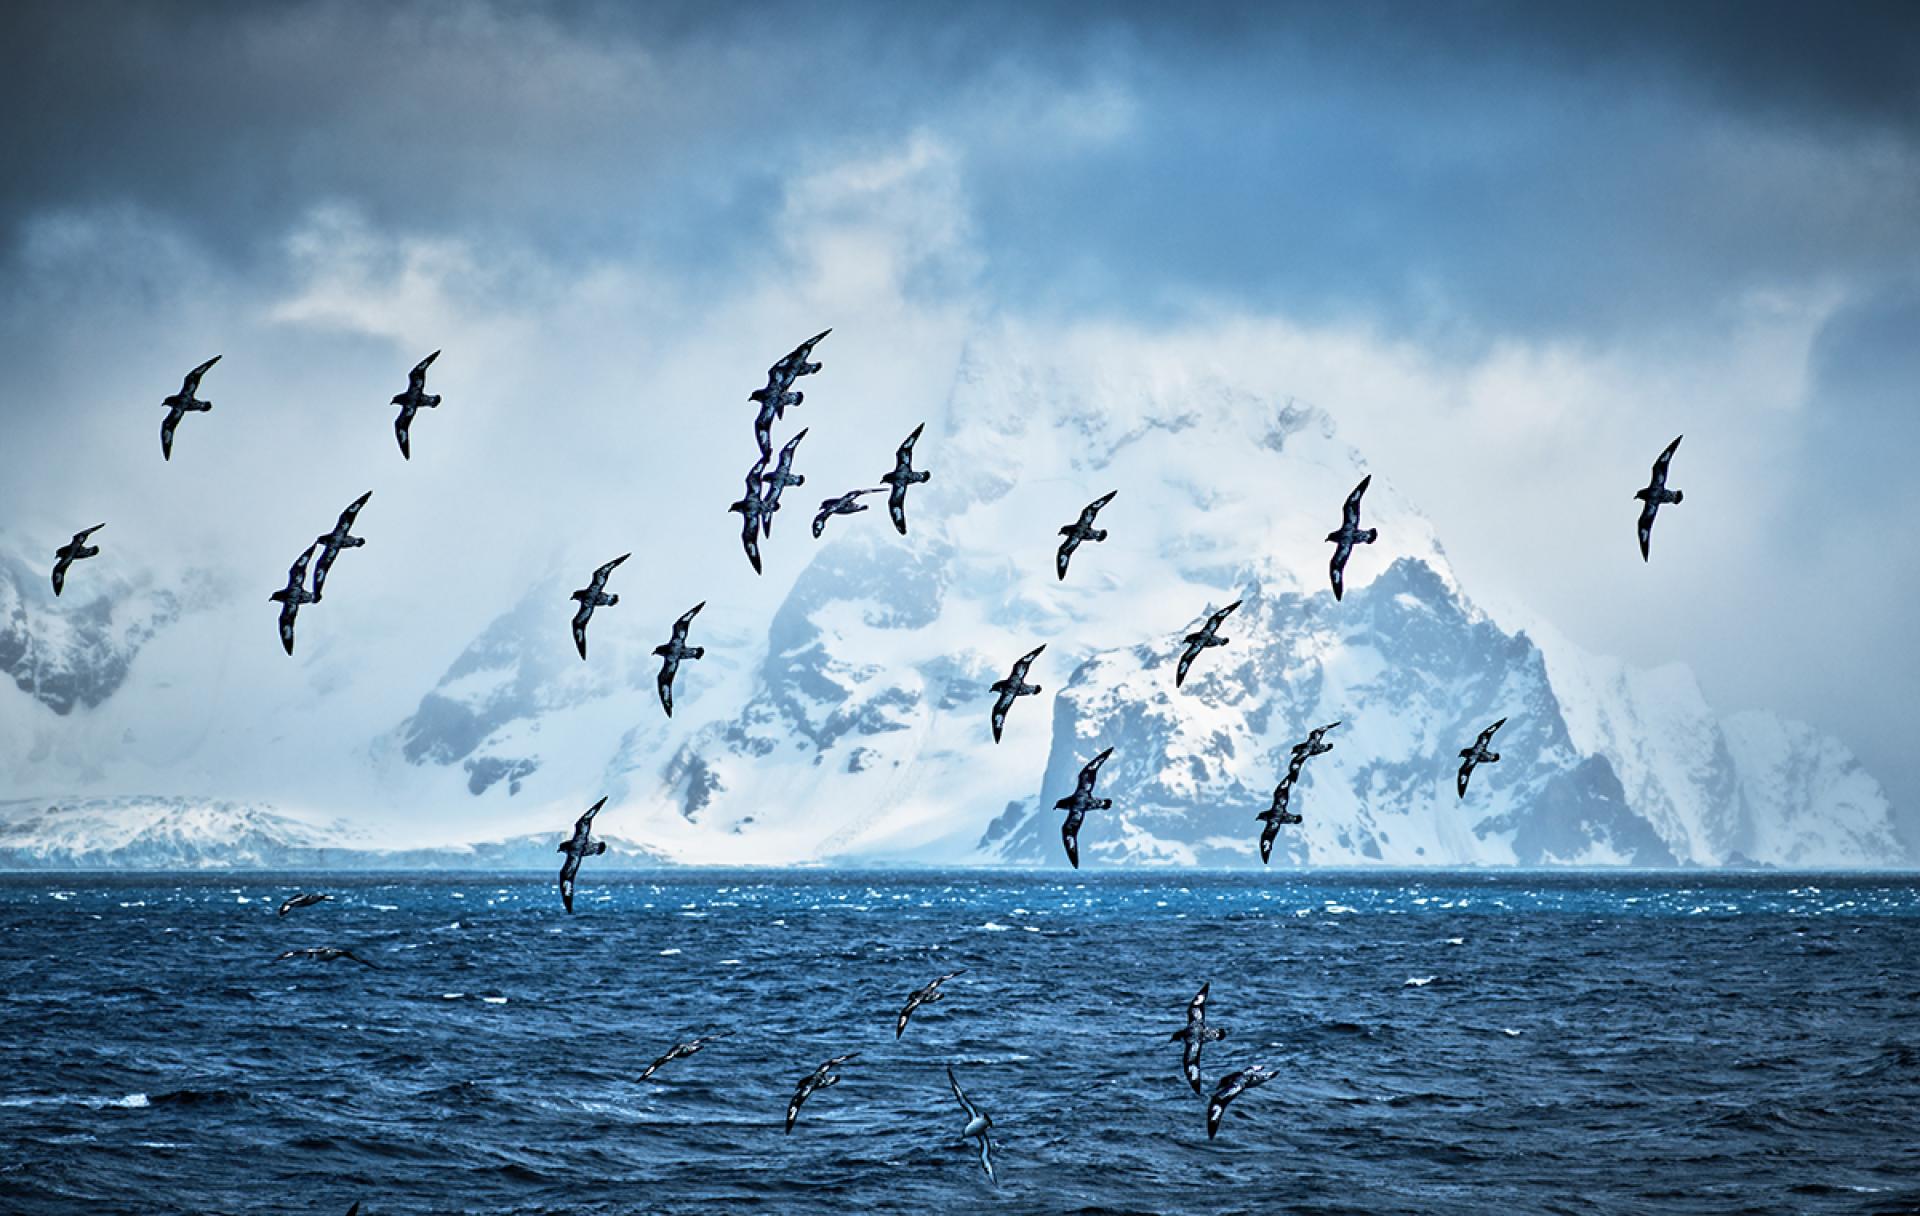 London Photography Awards Winner - Beautiful Antarctica